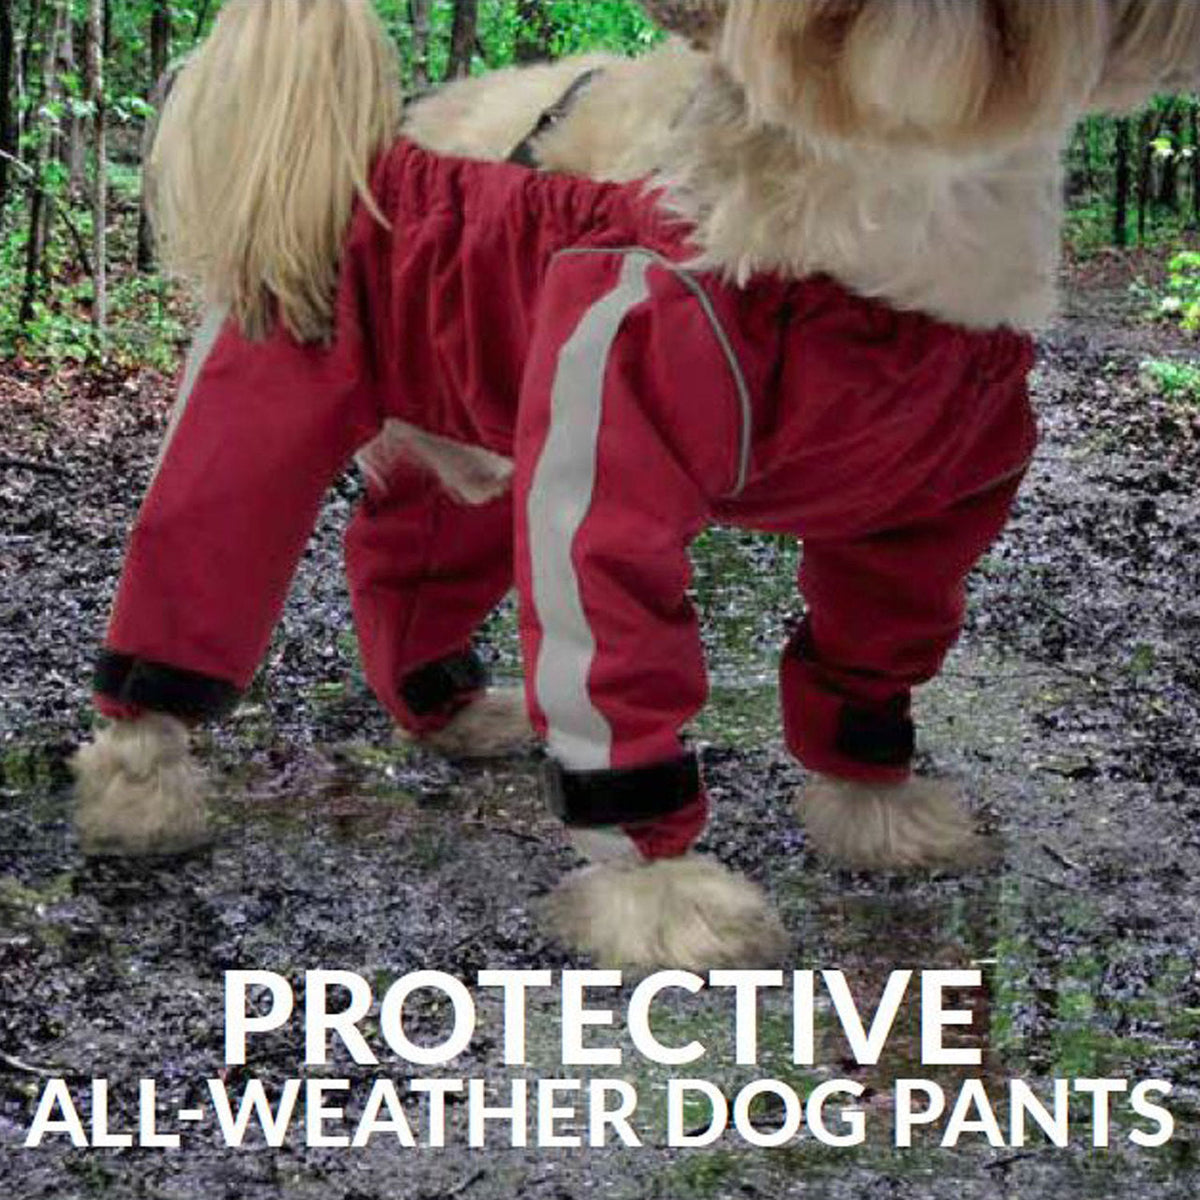 Foufou Dog manteau Pantalon pour chiens Bodyguard - Protective All-Weather